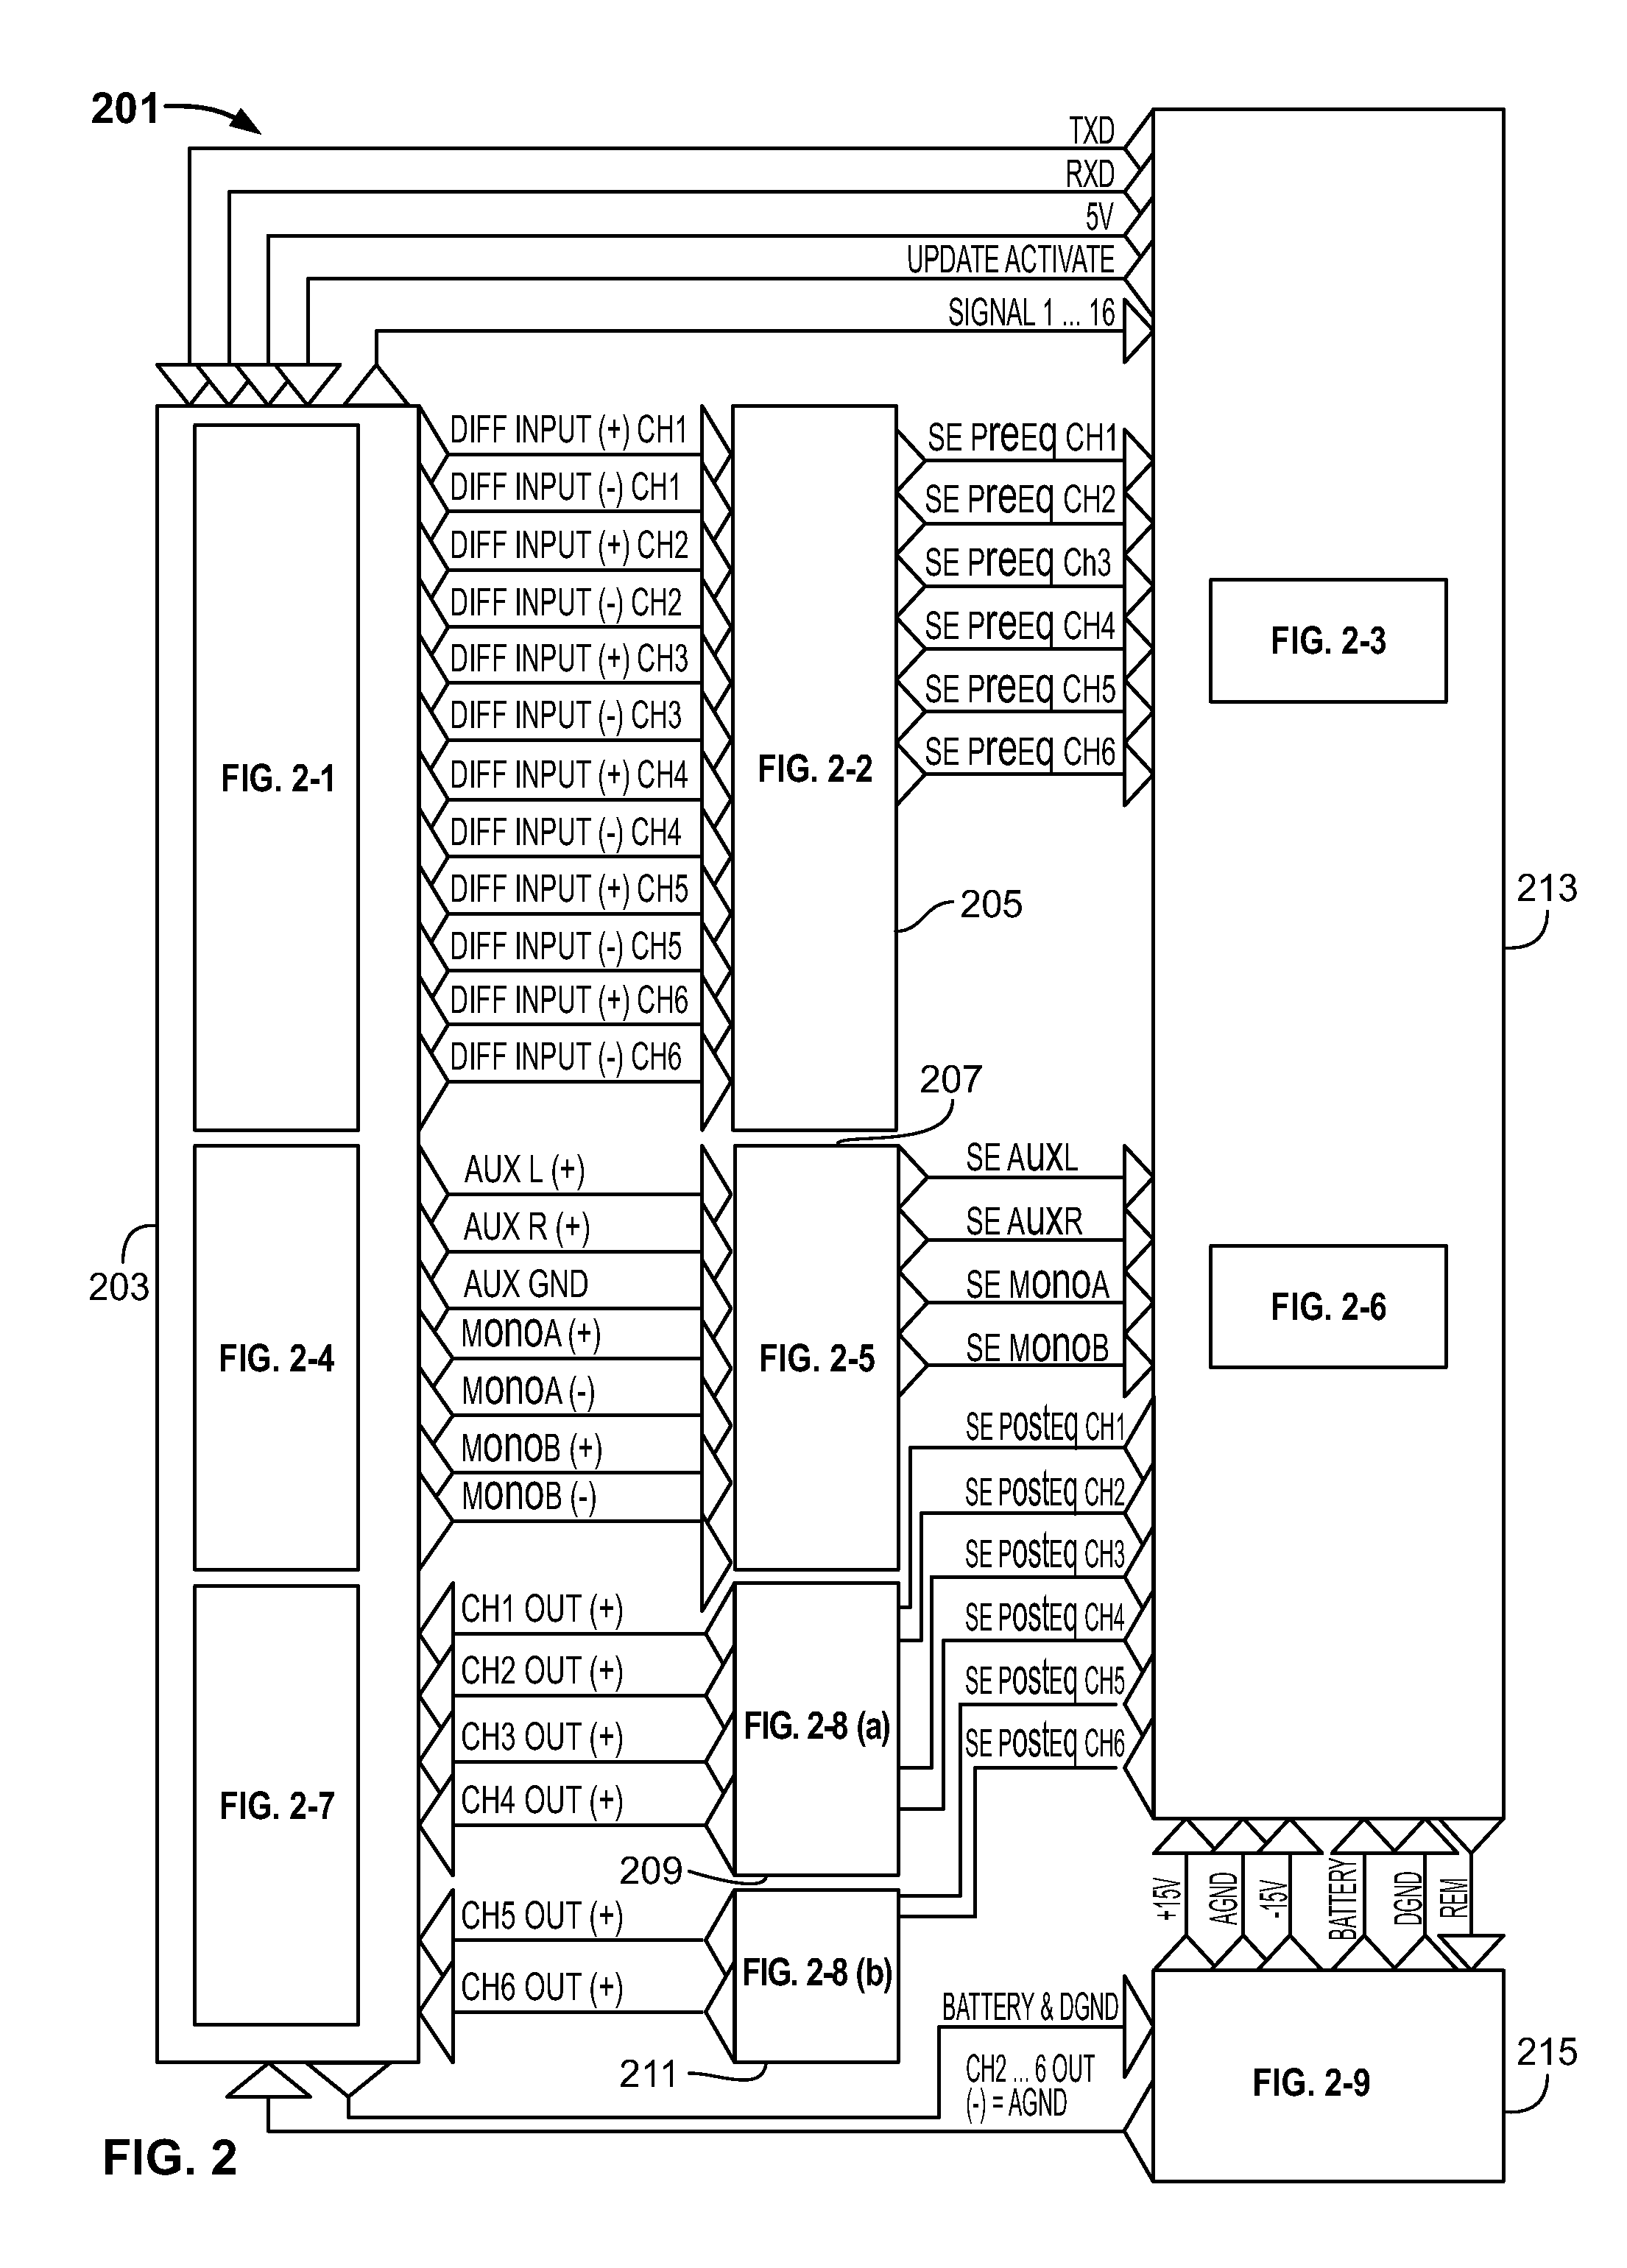 Original equipment manufacturer ("oem") integration amplifier